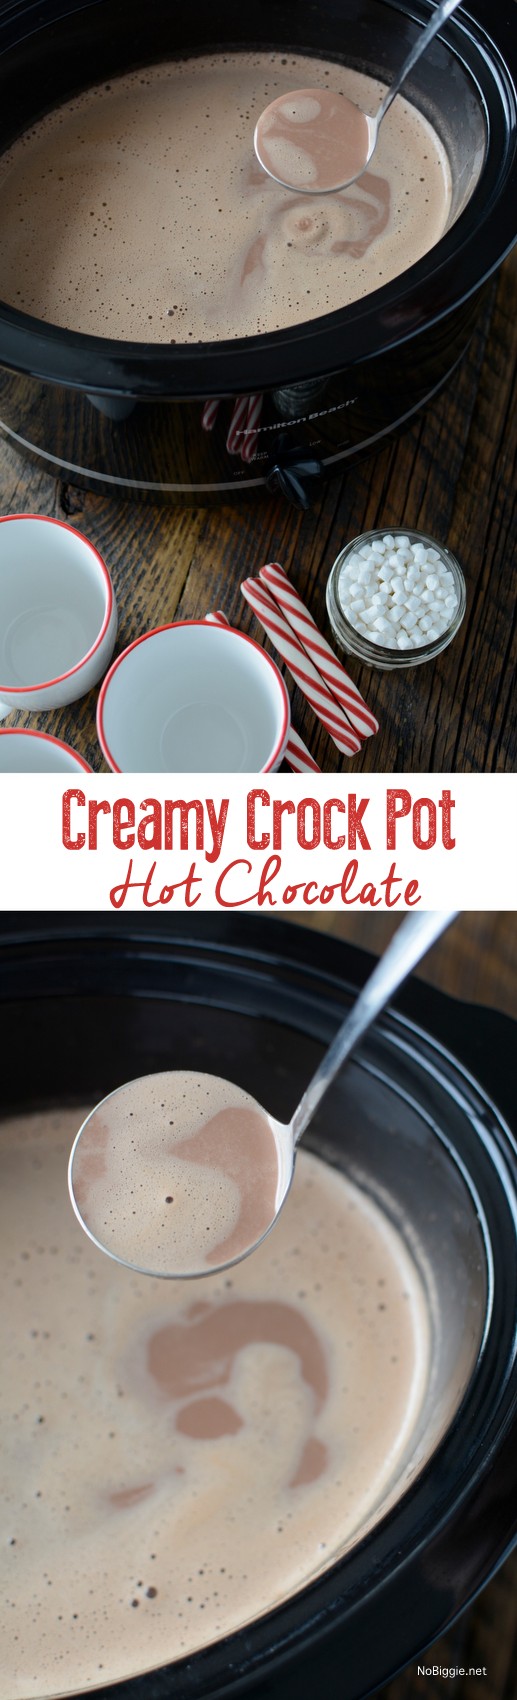 https://www.nobiggie.net/wp-content/uploads/2015/12/Creamy-Crockpot-Hot-Chocolate-this-recipe-is-so-easy-and-it-feeds-a-crowd-NoBiggie.net_.jpg